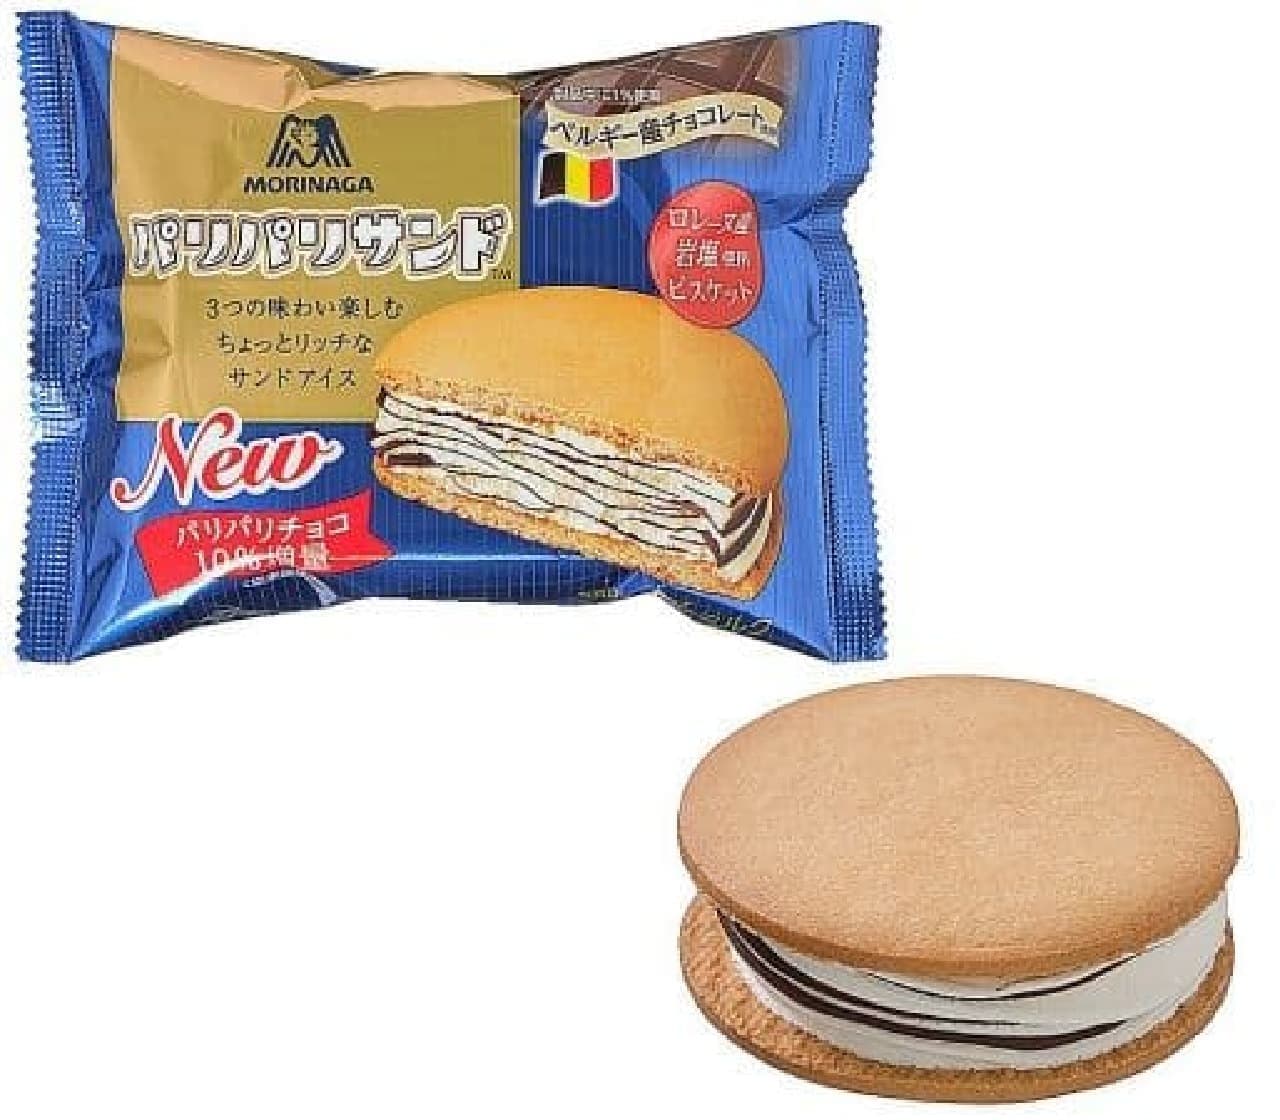 Morinaga's Crunchy Sandwich